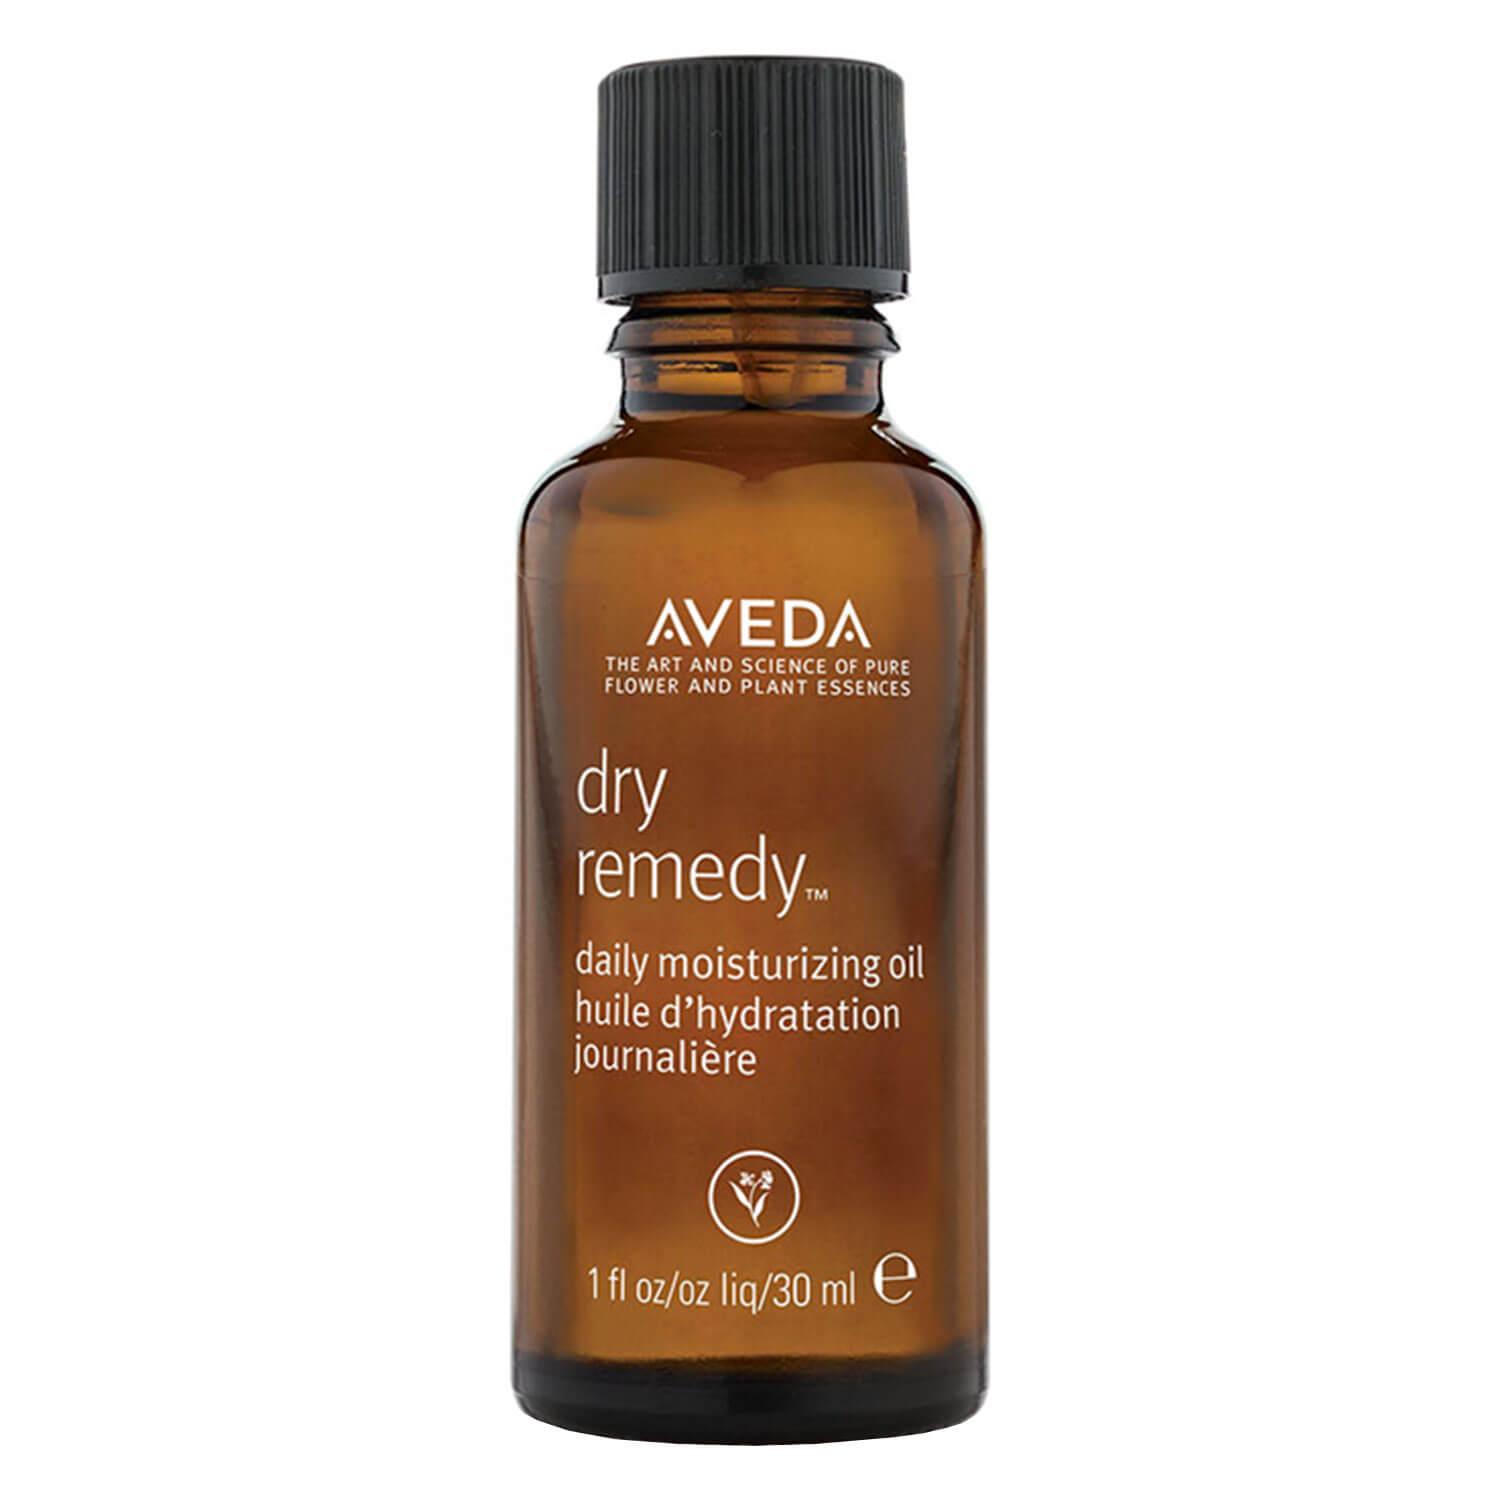 dry remedy - daily moisturizing oil